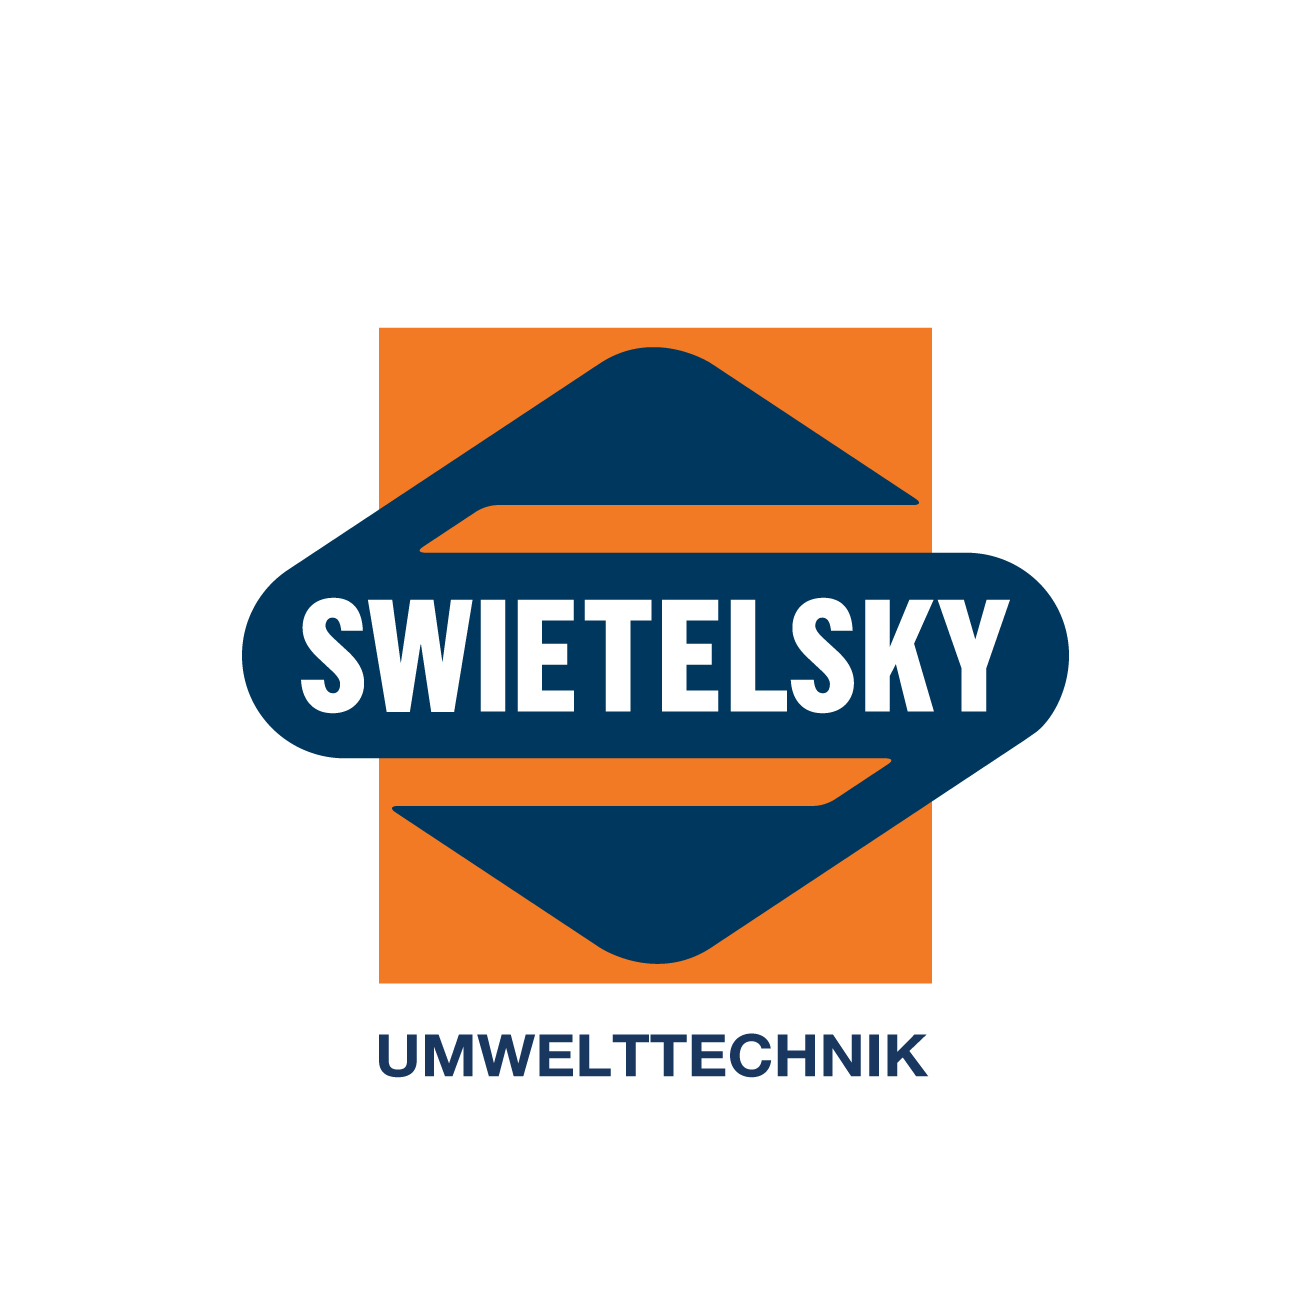 Swietelsky Umwelttechnik GmbH